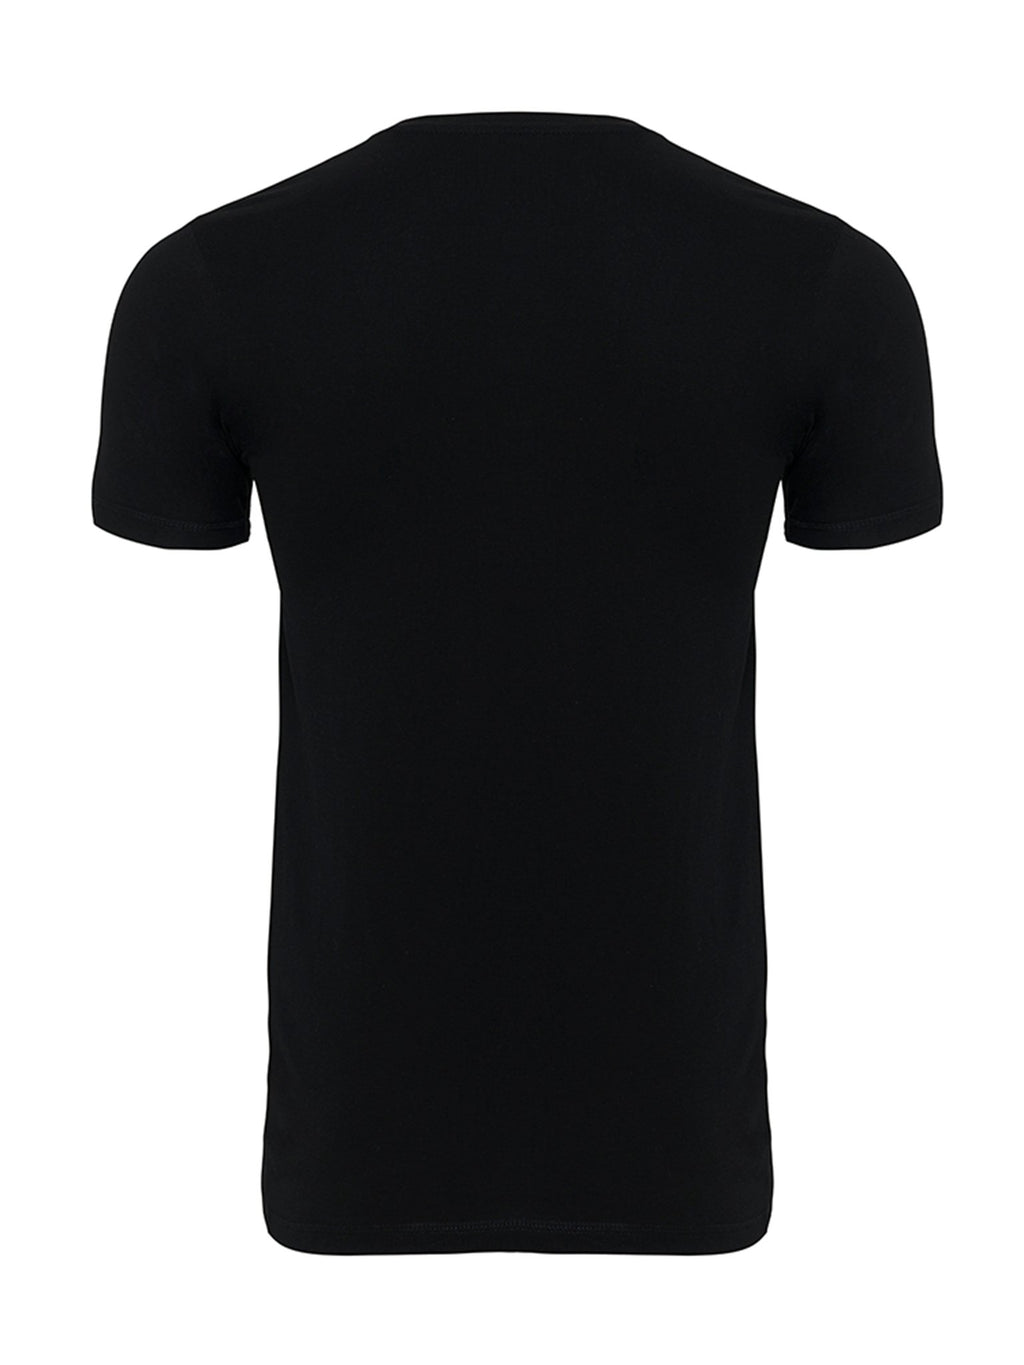 Muscle T-shirt - Black